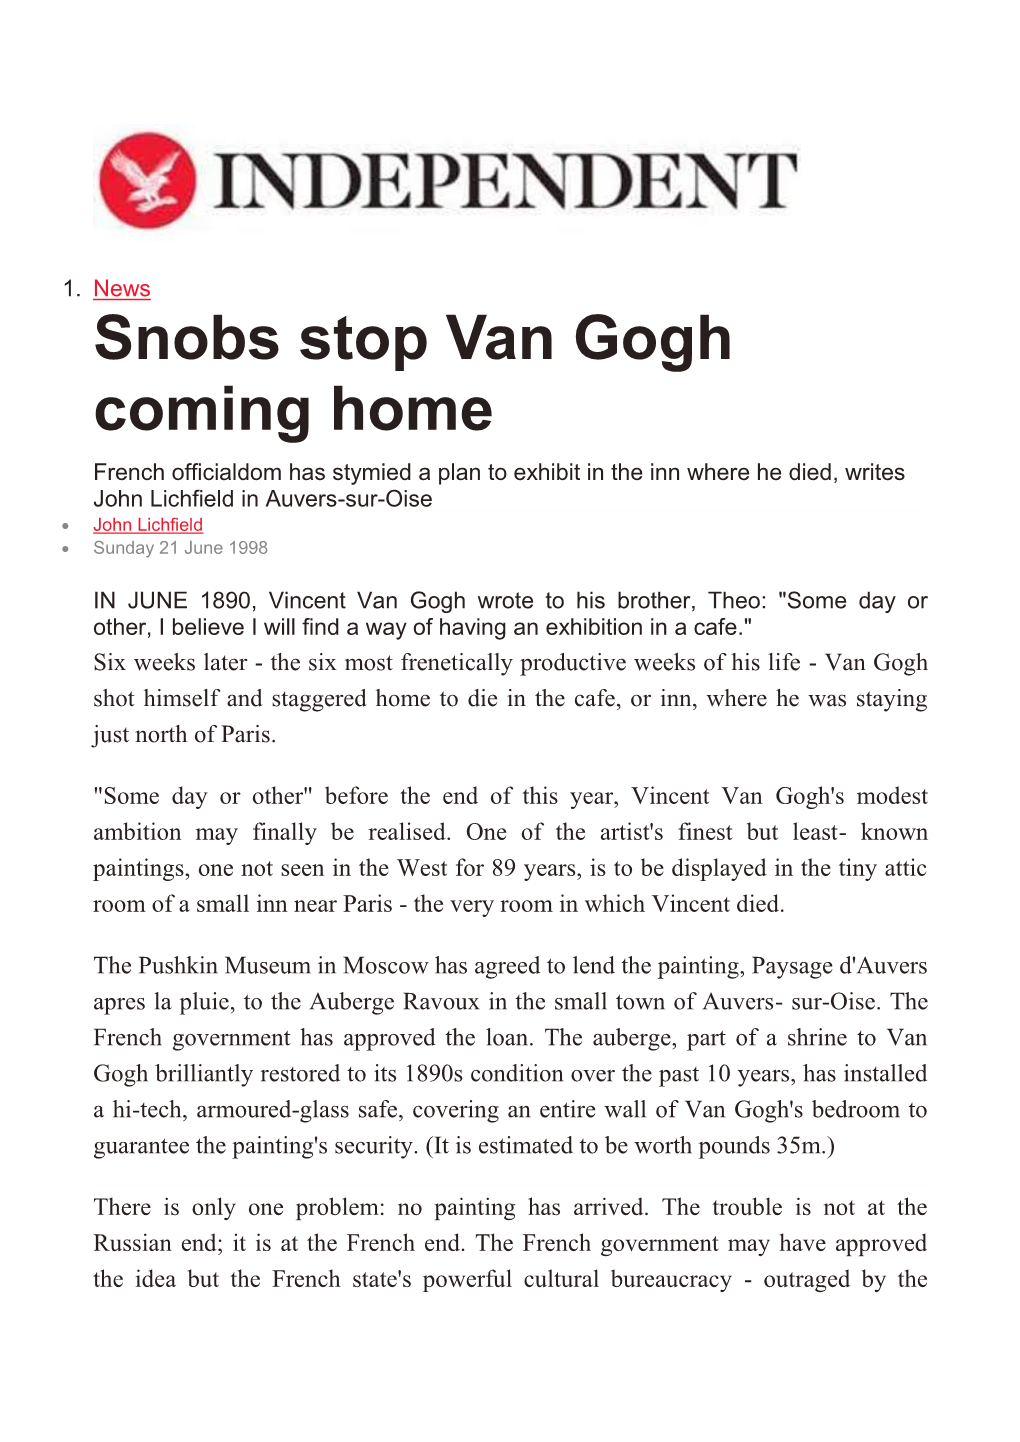 Snobs Stop Van Gogh Coming Home